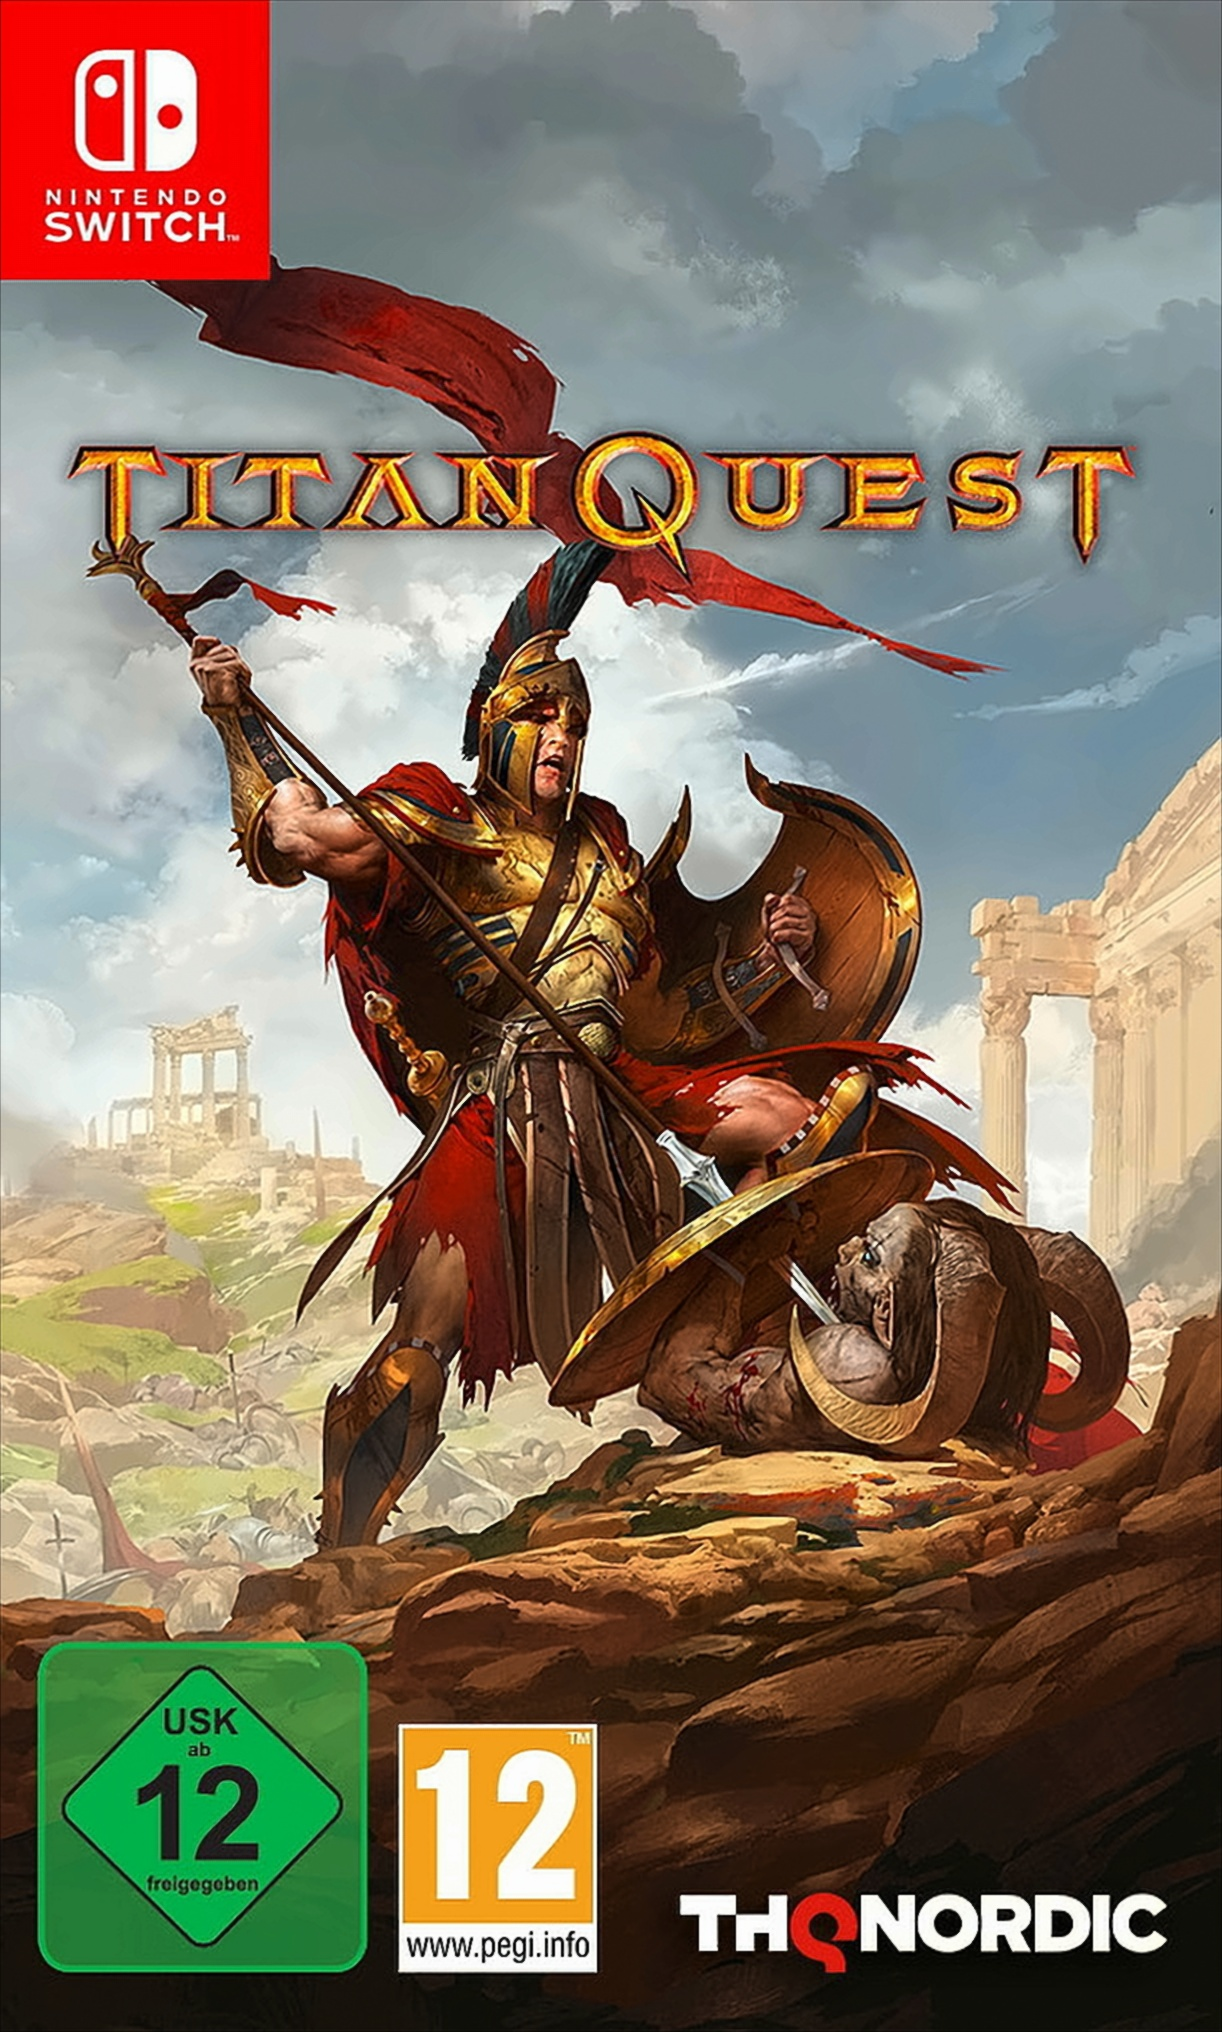 Titan Switch] - Quest [Nintendo